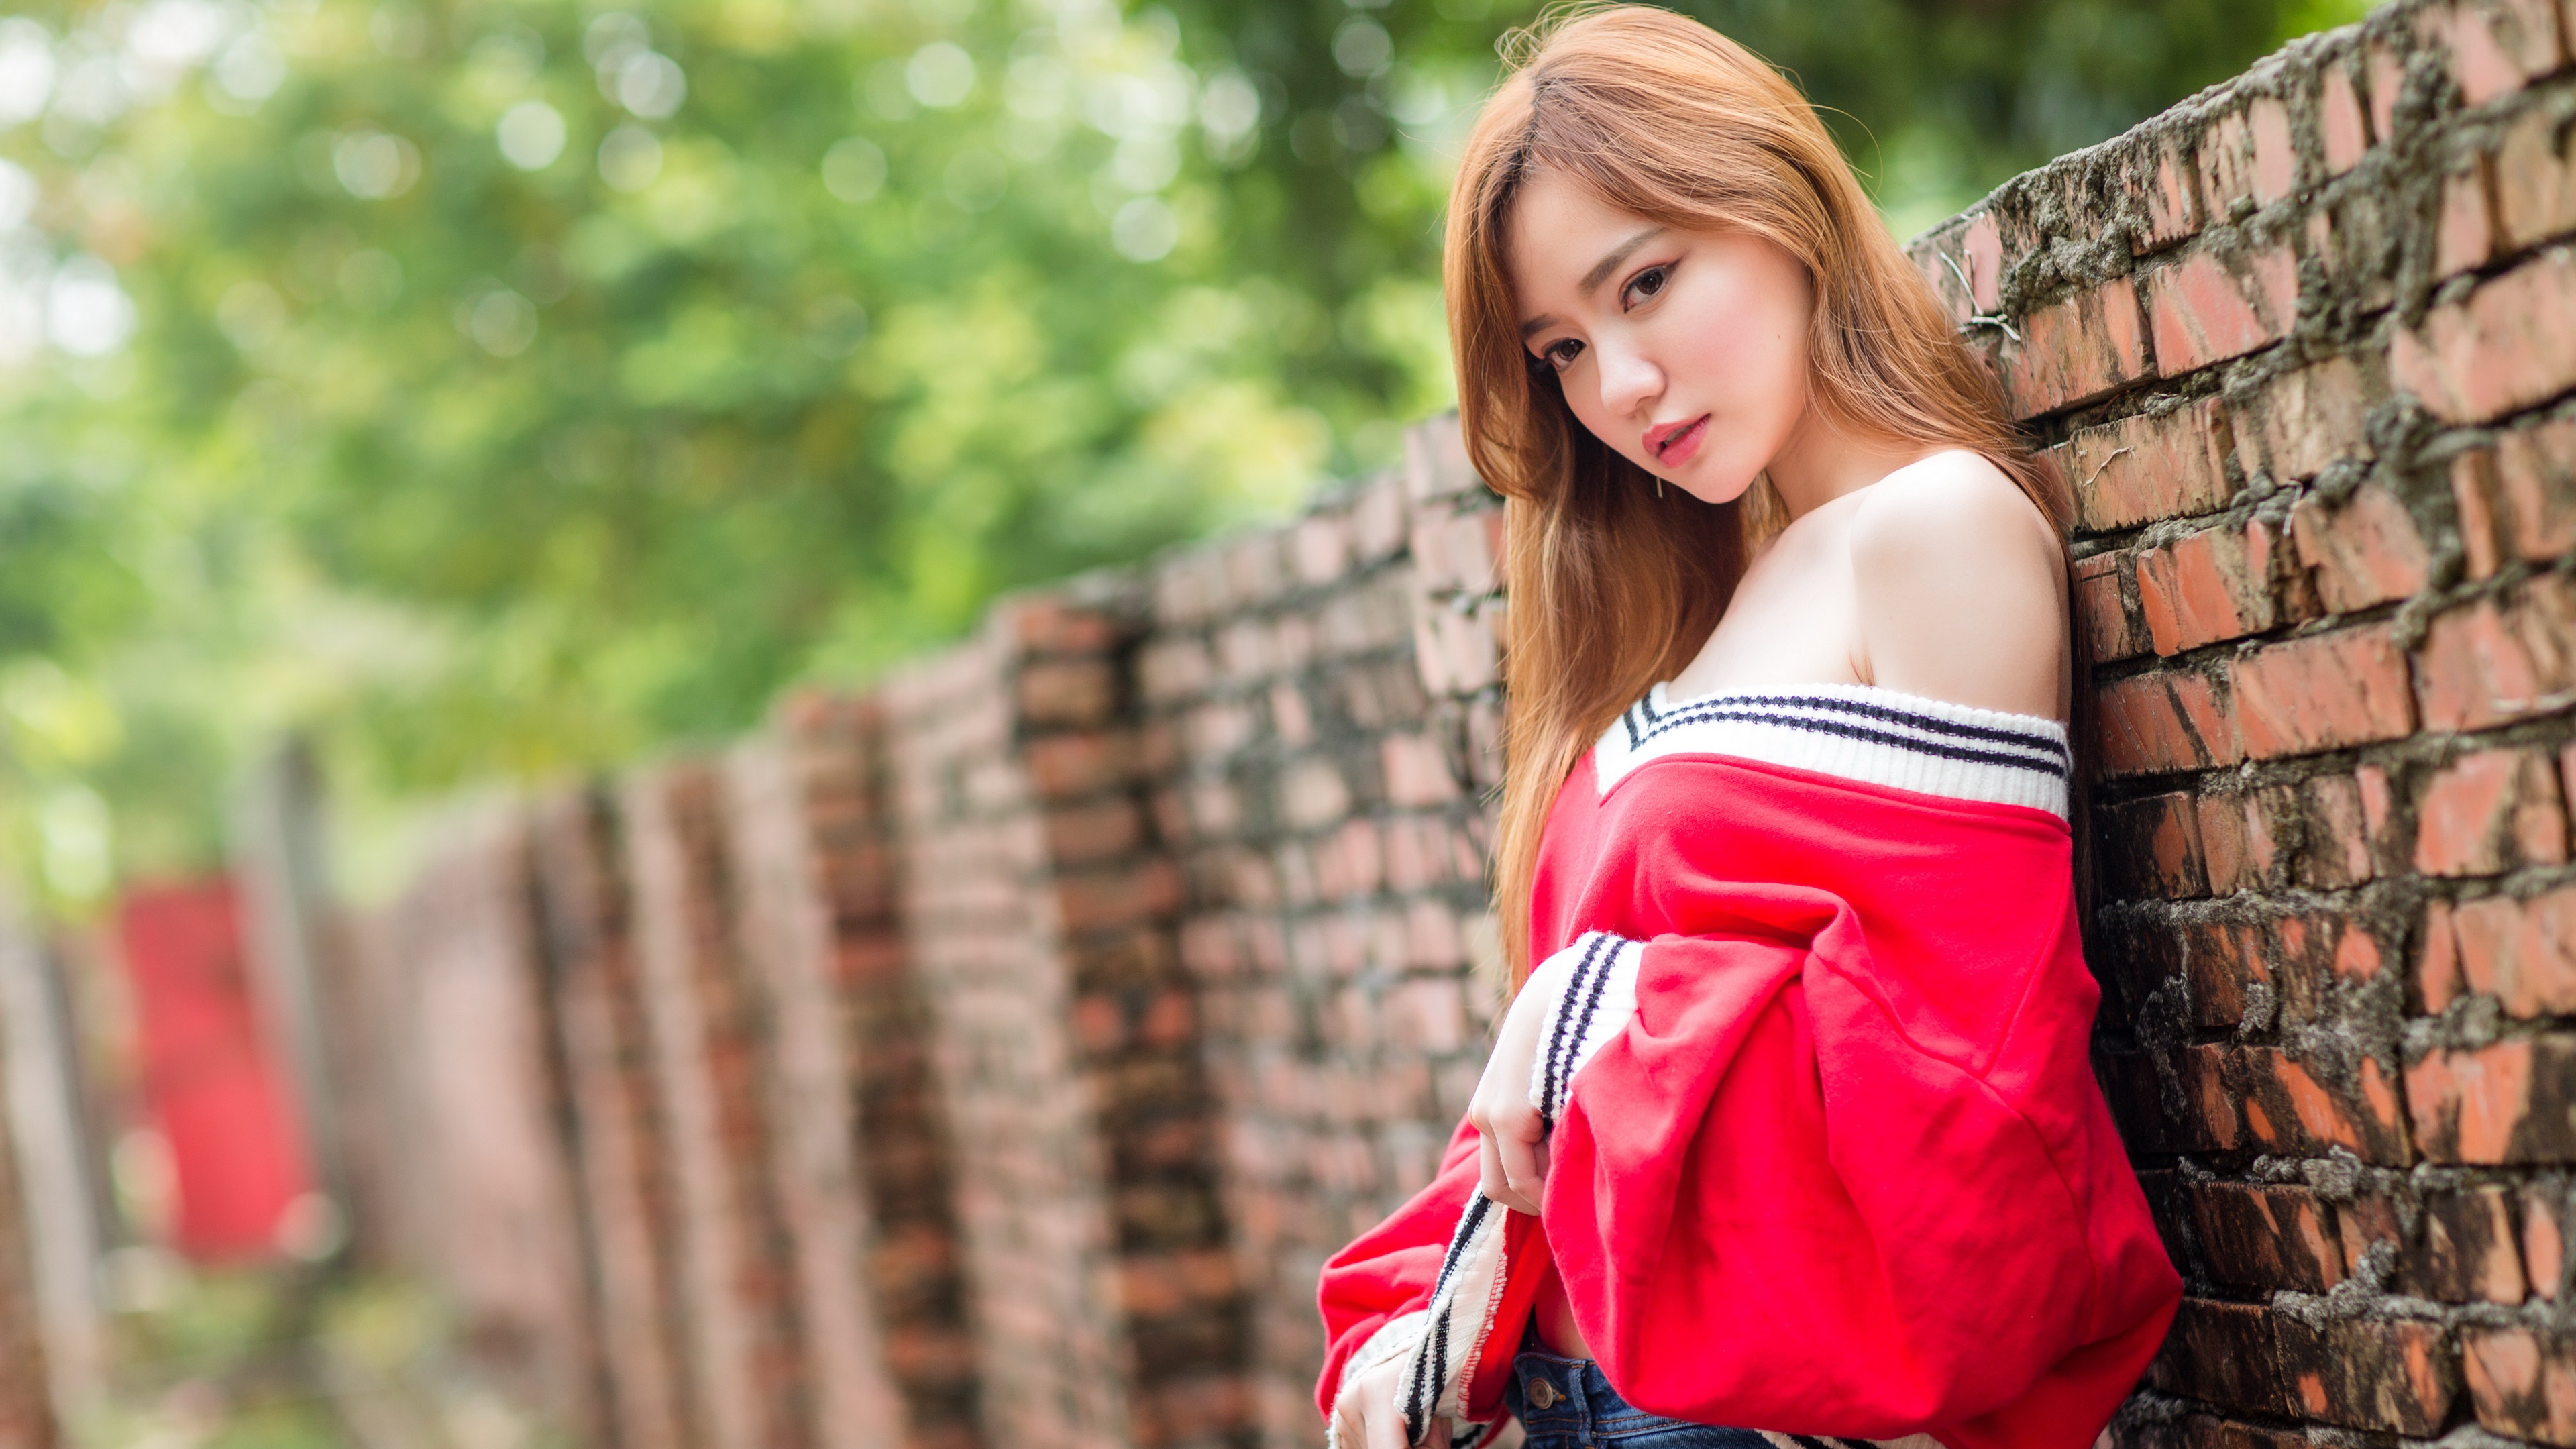 Asian Women Model Wall Looking At Viewer Leaning Women Outdoors Long Hair Sweatshirts Bare Shoulders 3840x2160